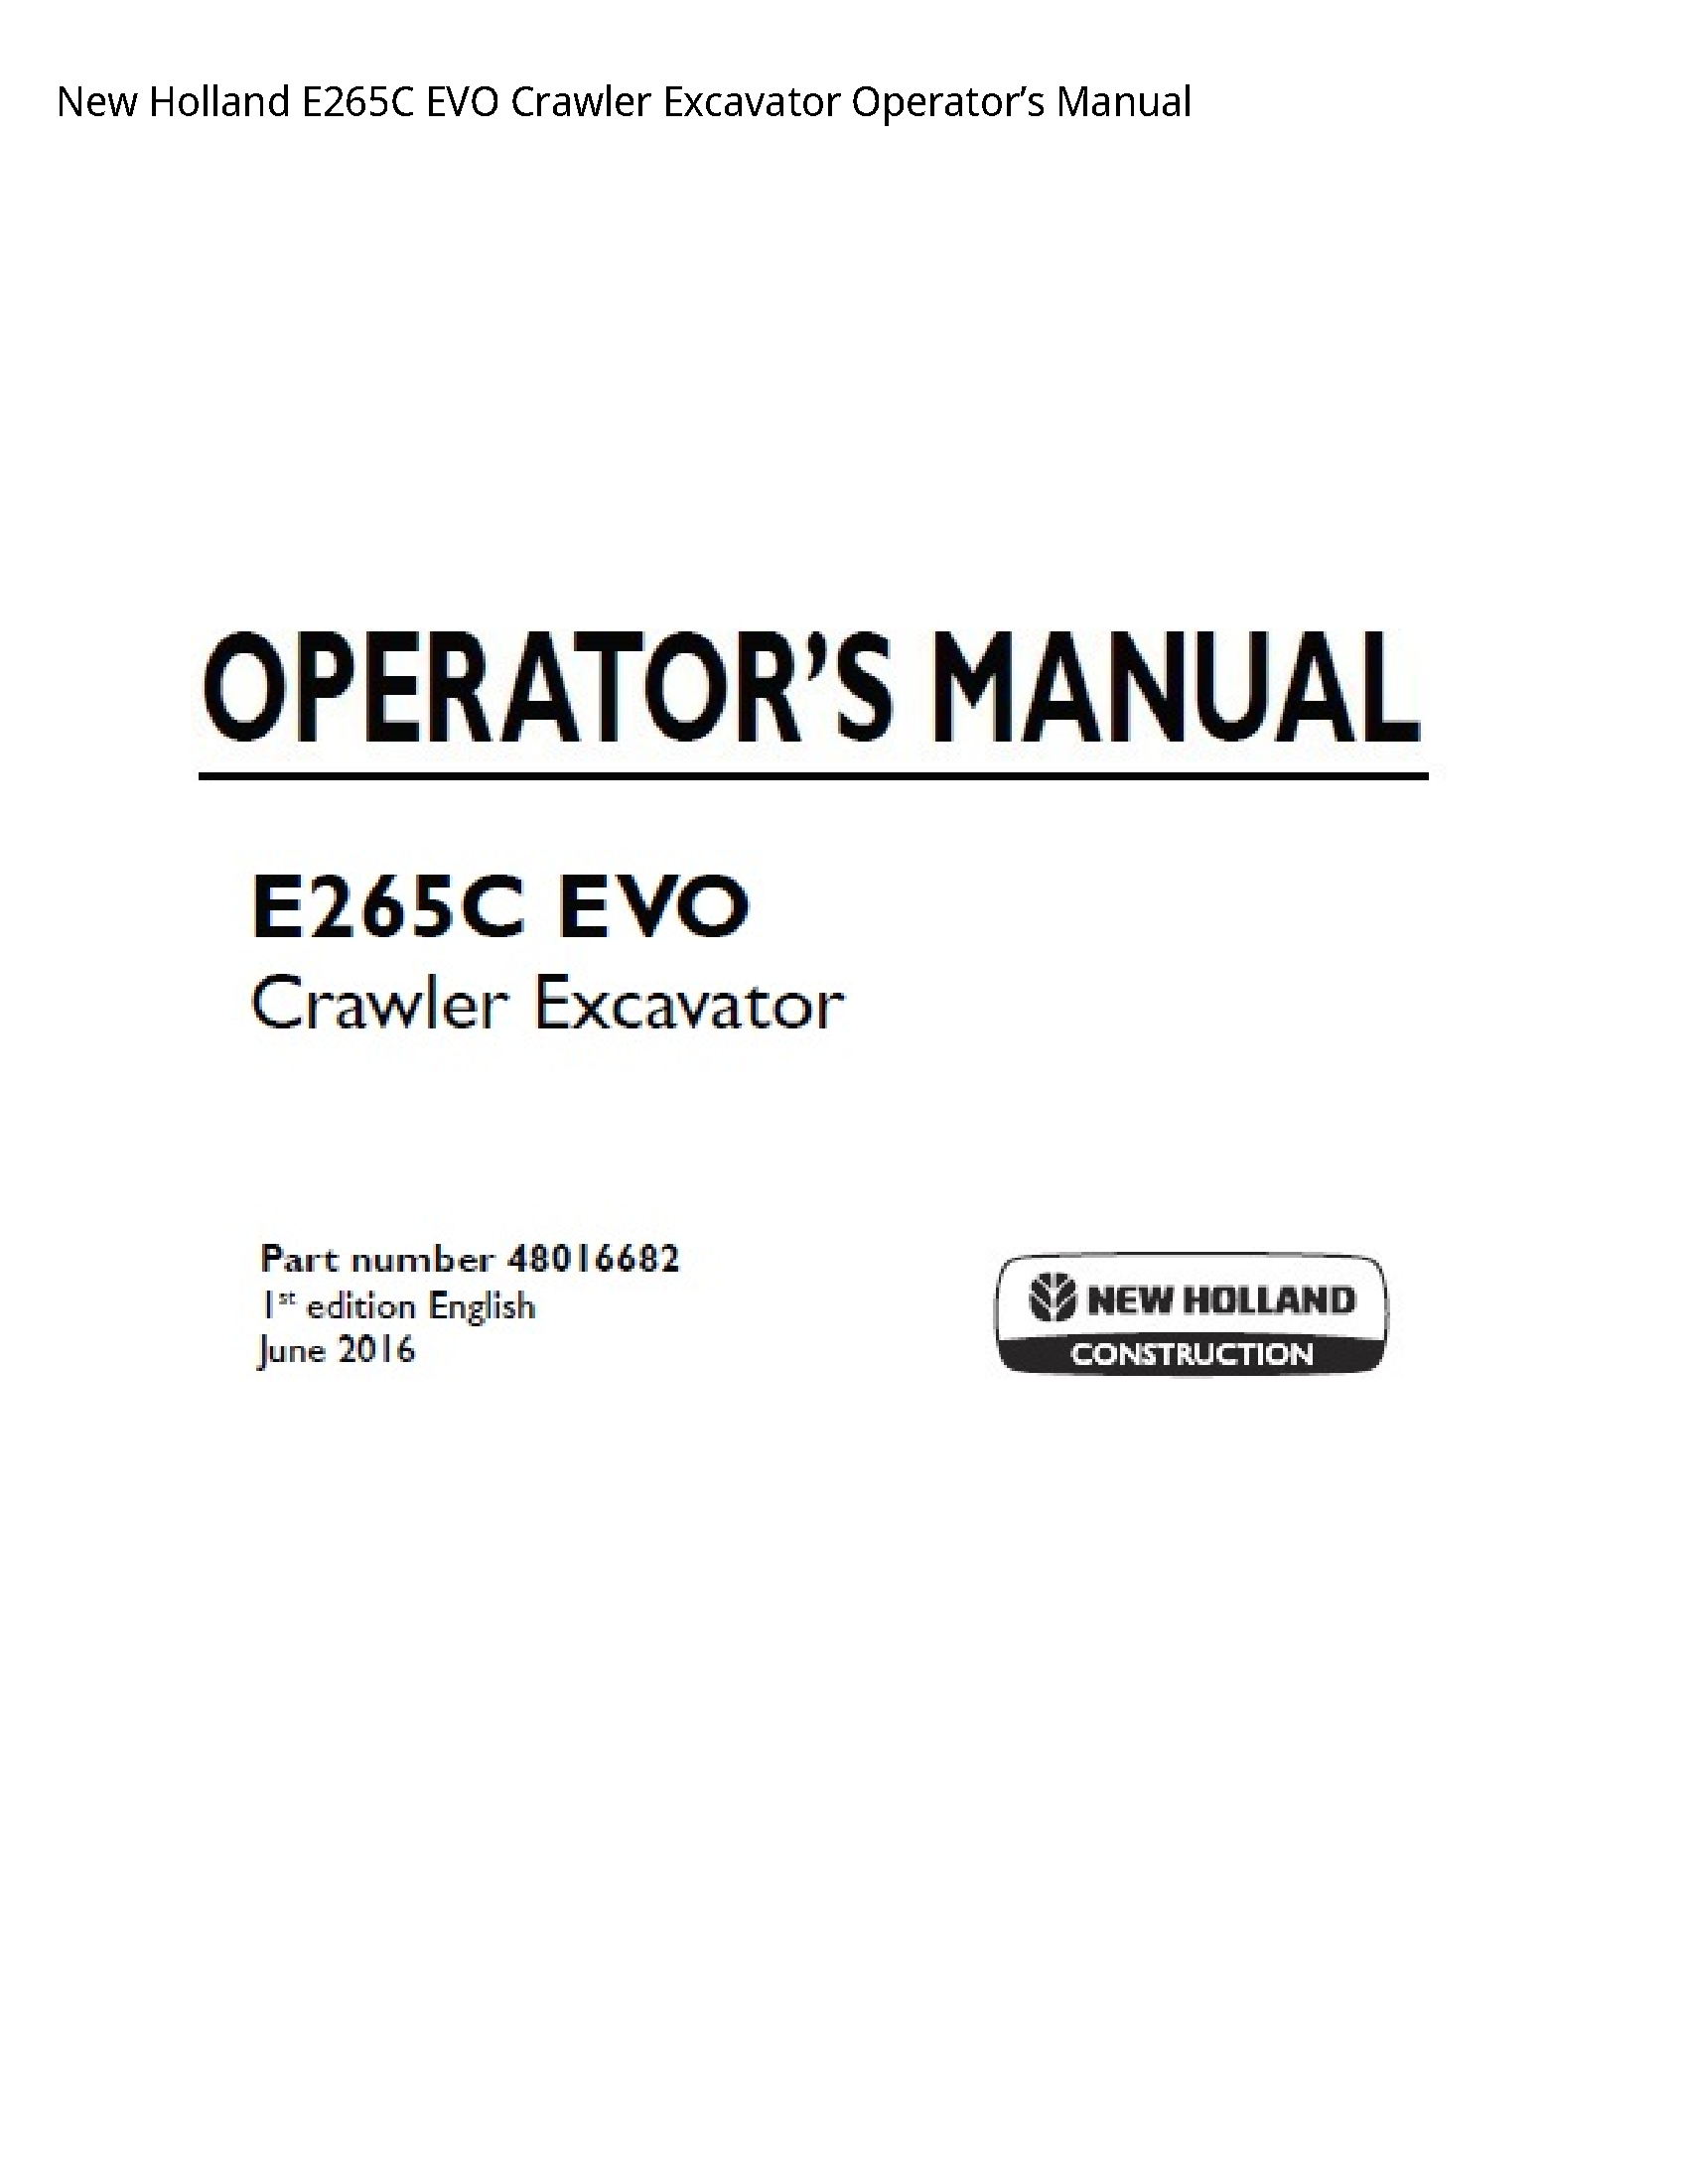 New Holland E265C EVO Crawler Excavator Operator’s manual